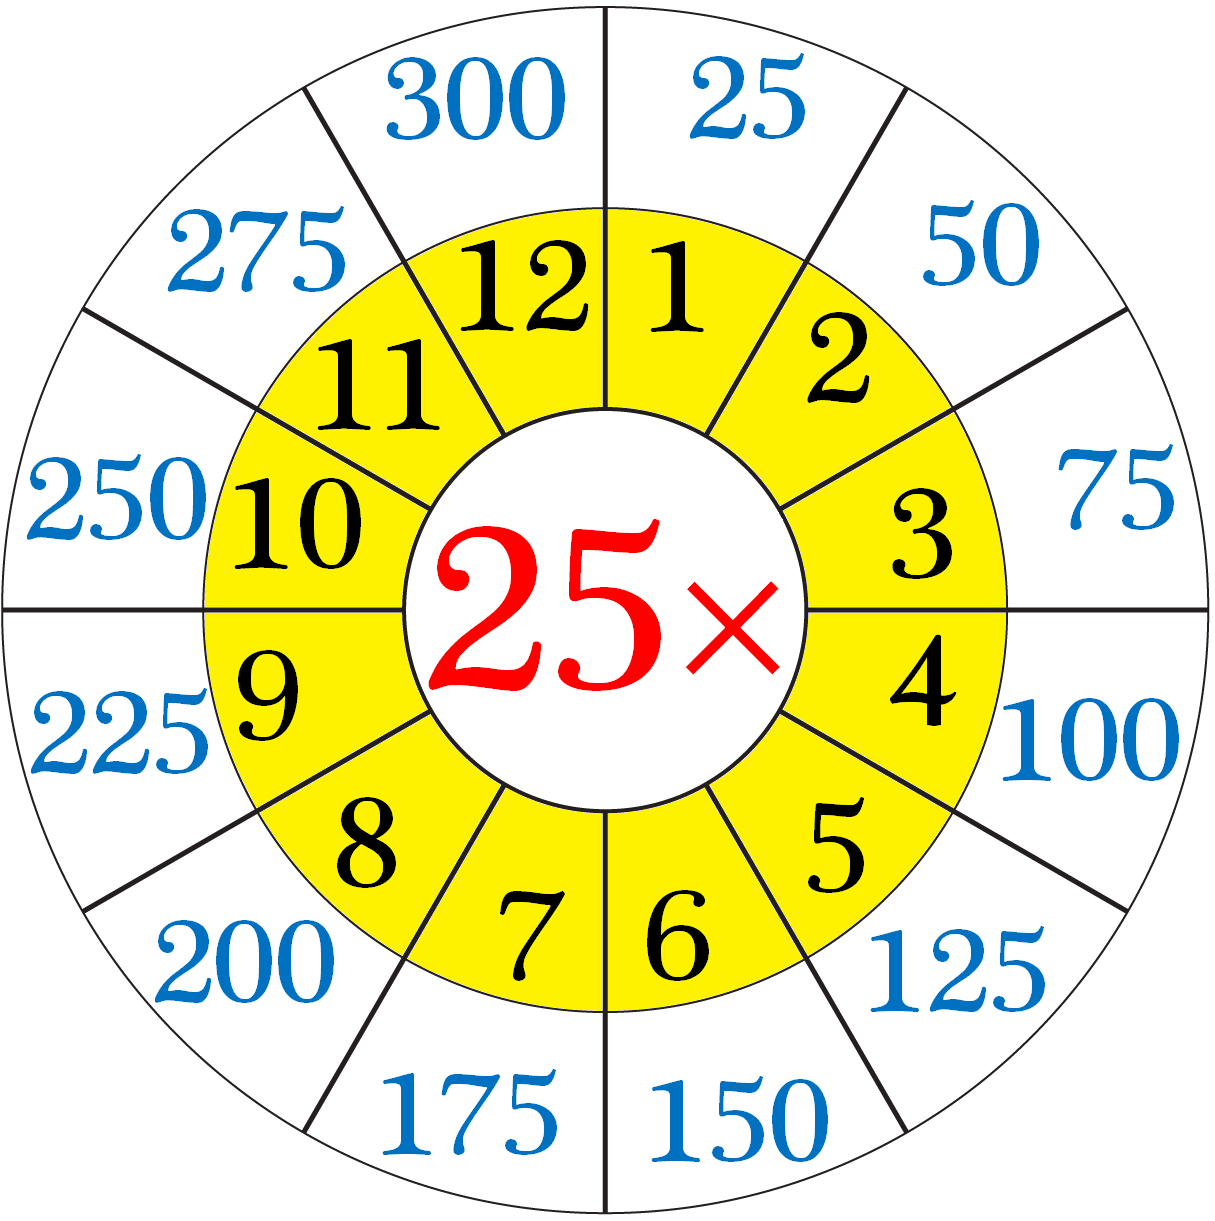 Multiplication Table of Twenty-Five